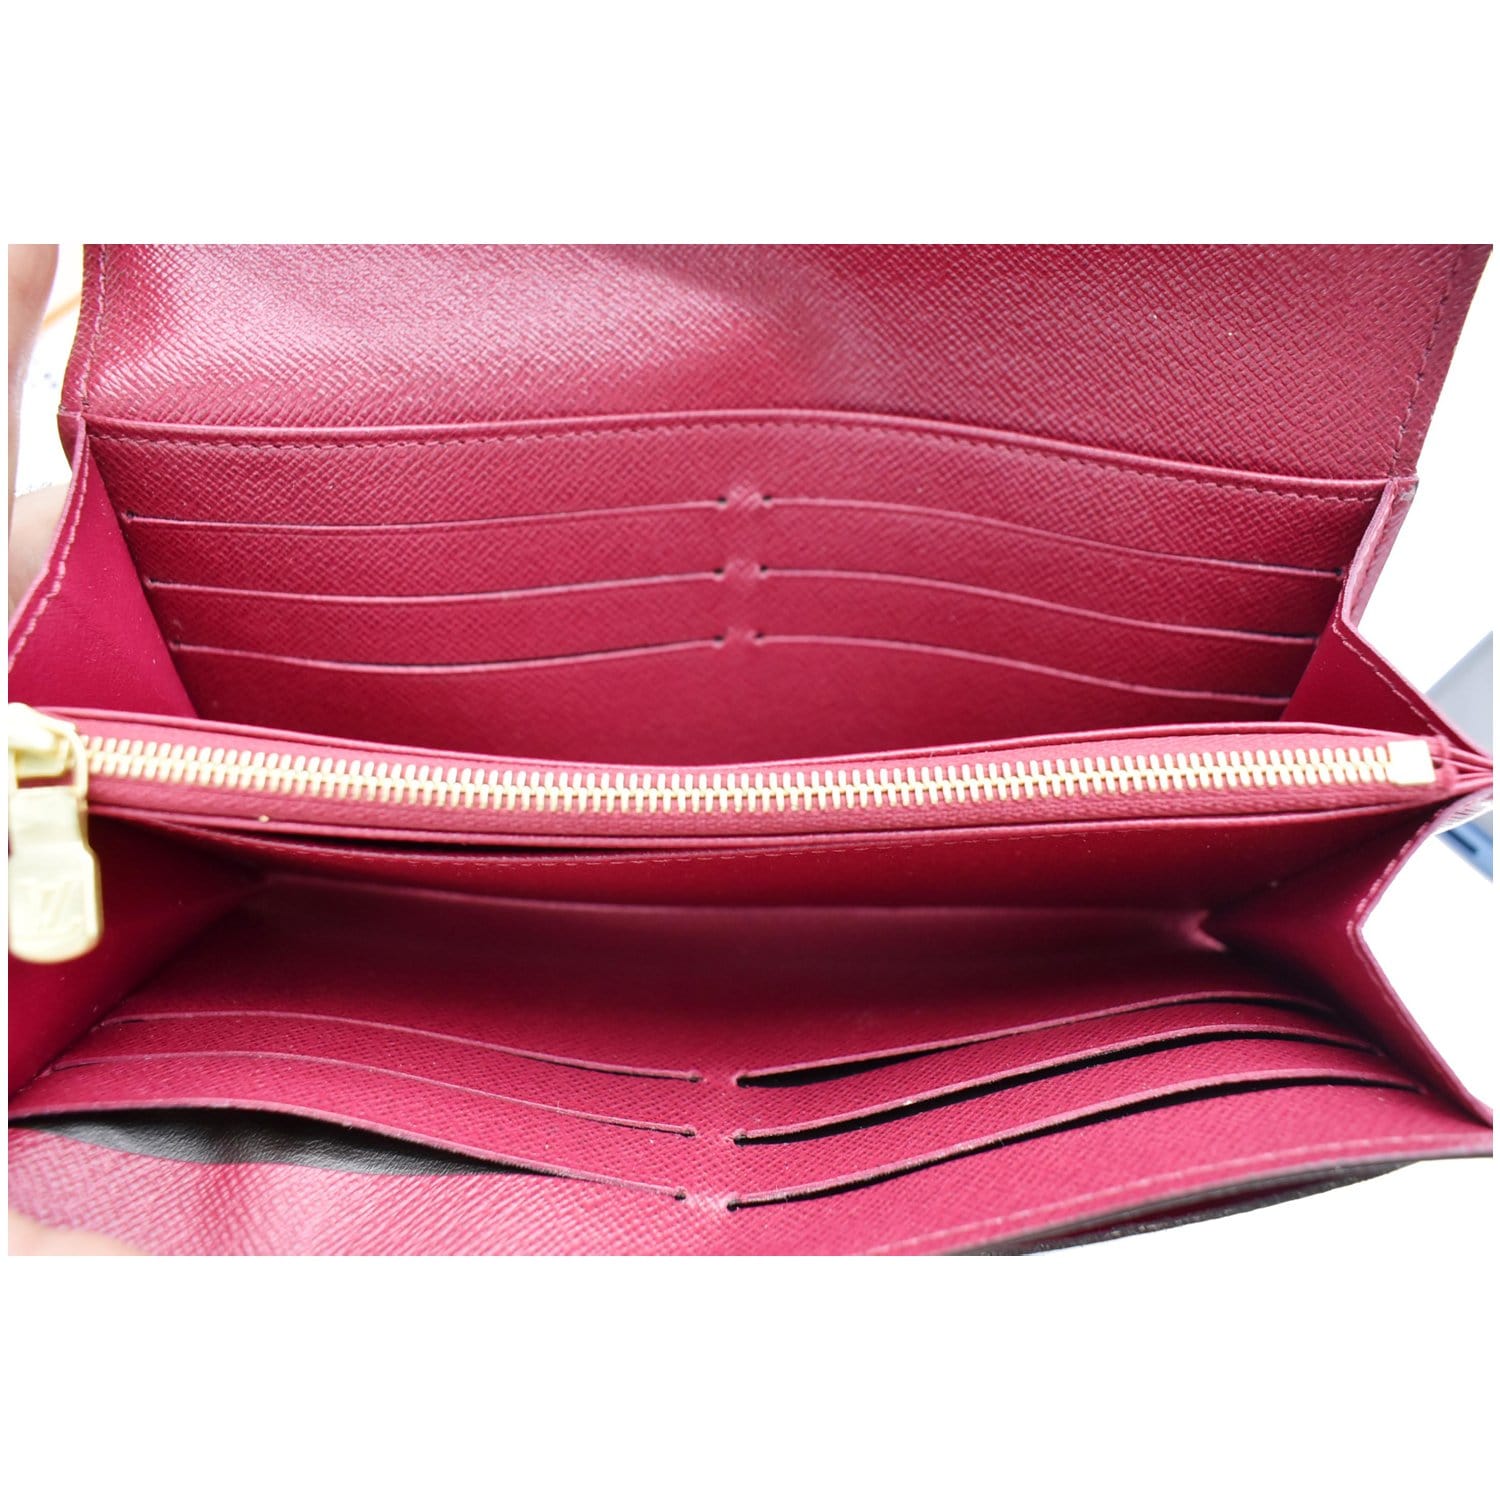 lv sarah wallet pink